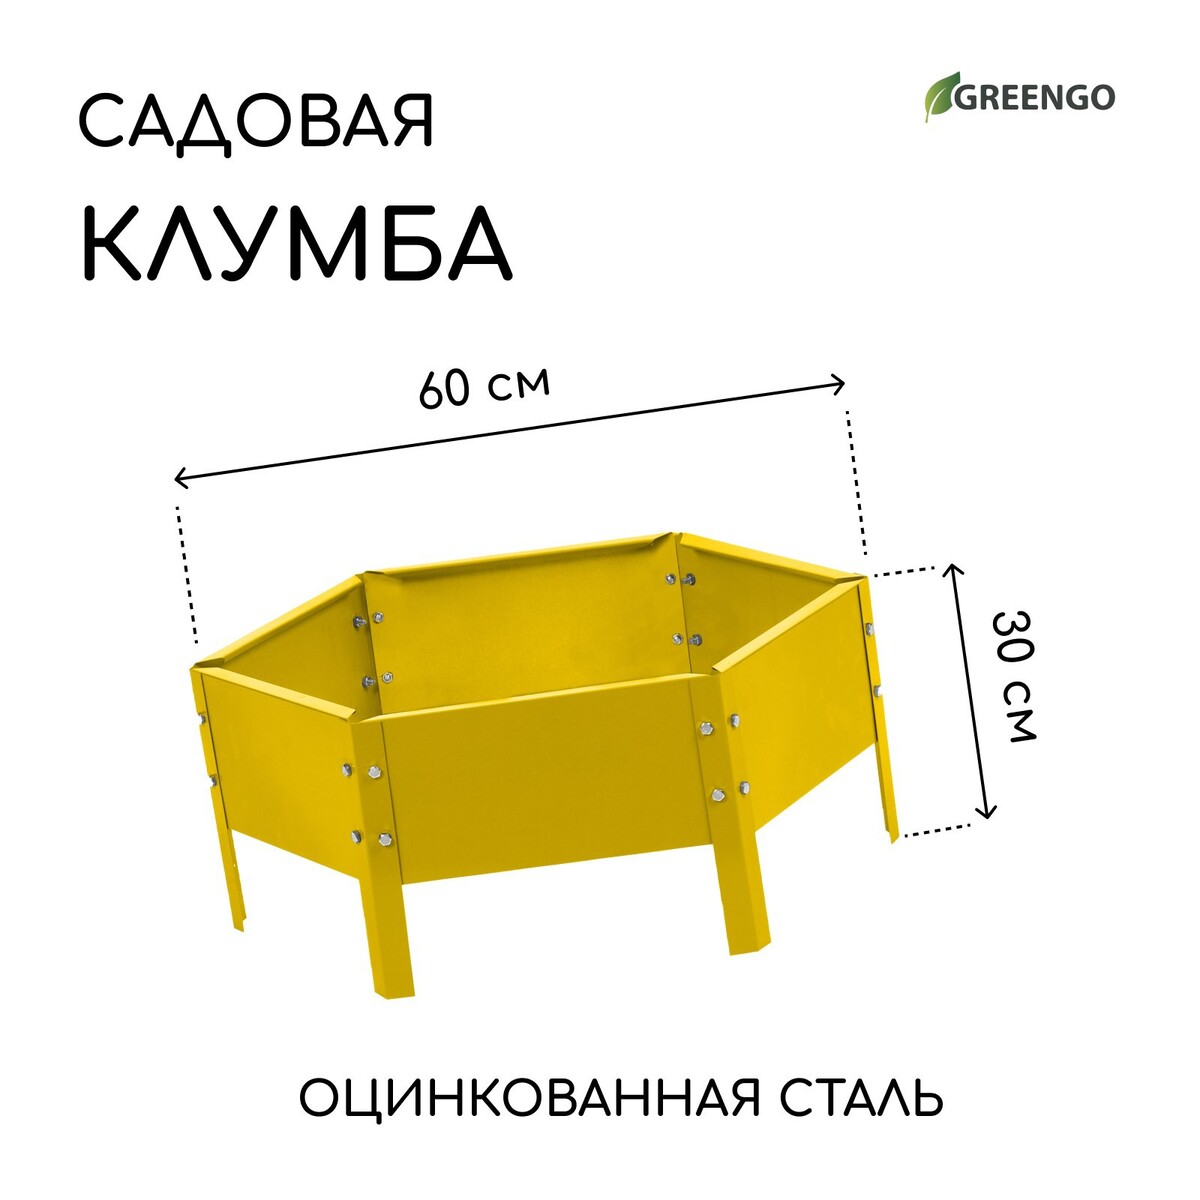 Клумба оцинкованная, d = 60 см, h = 15 см, желтая, greengo